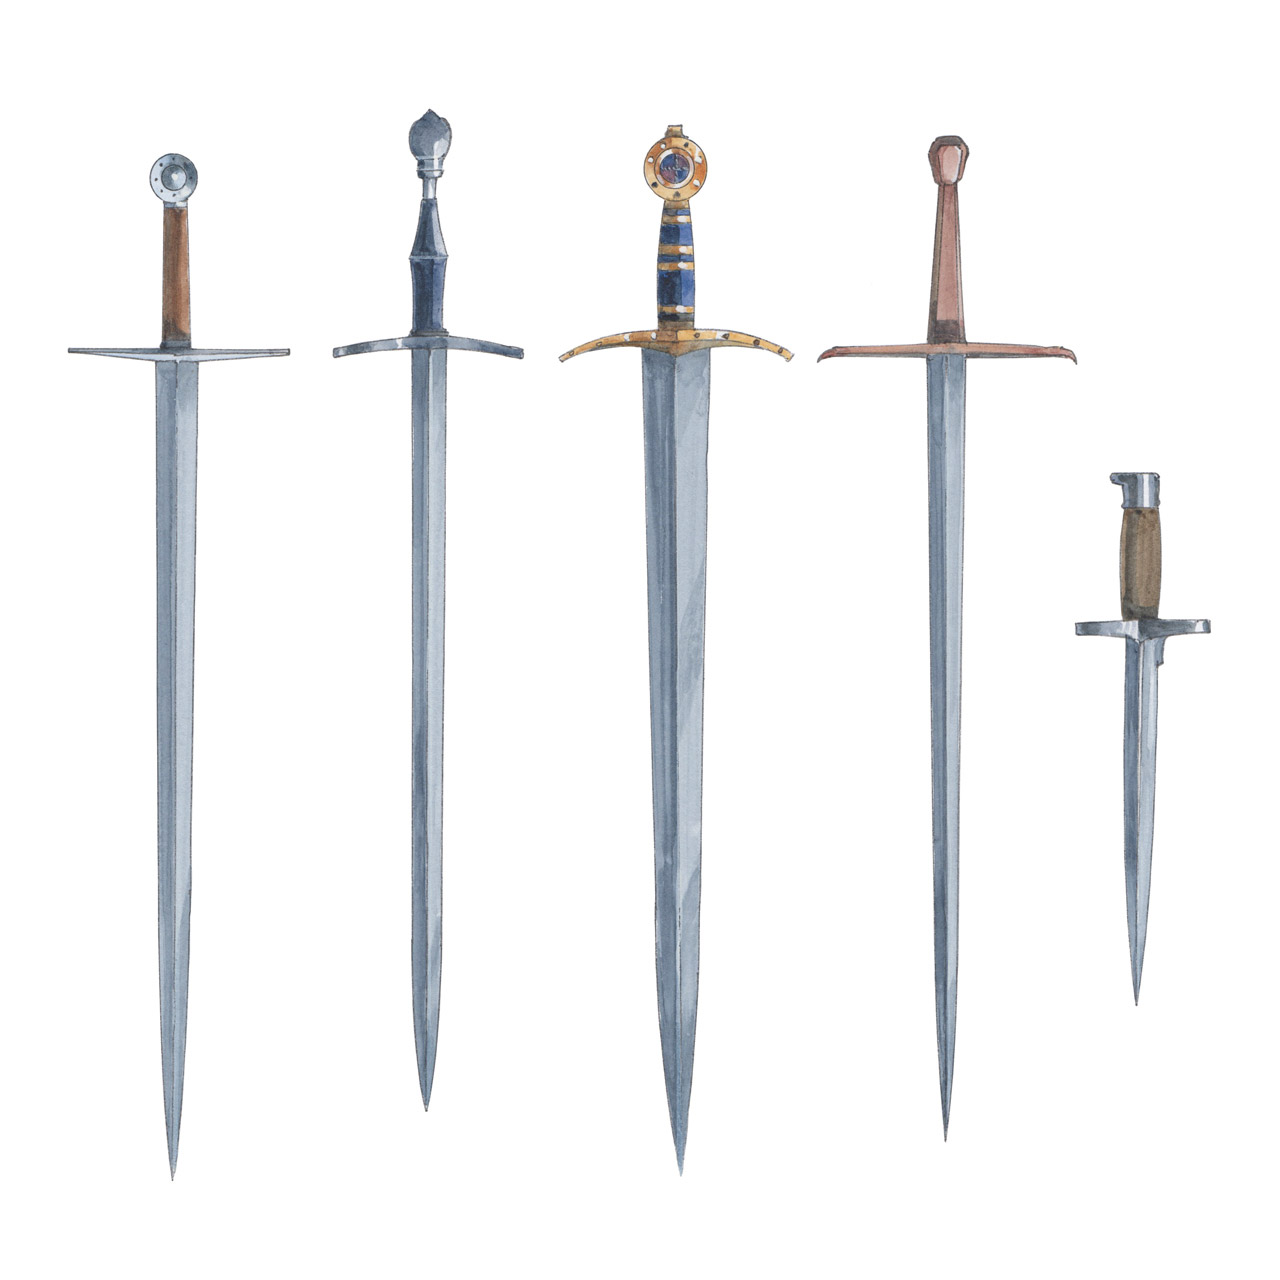 illustration of swords